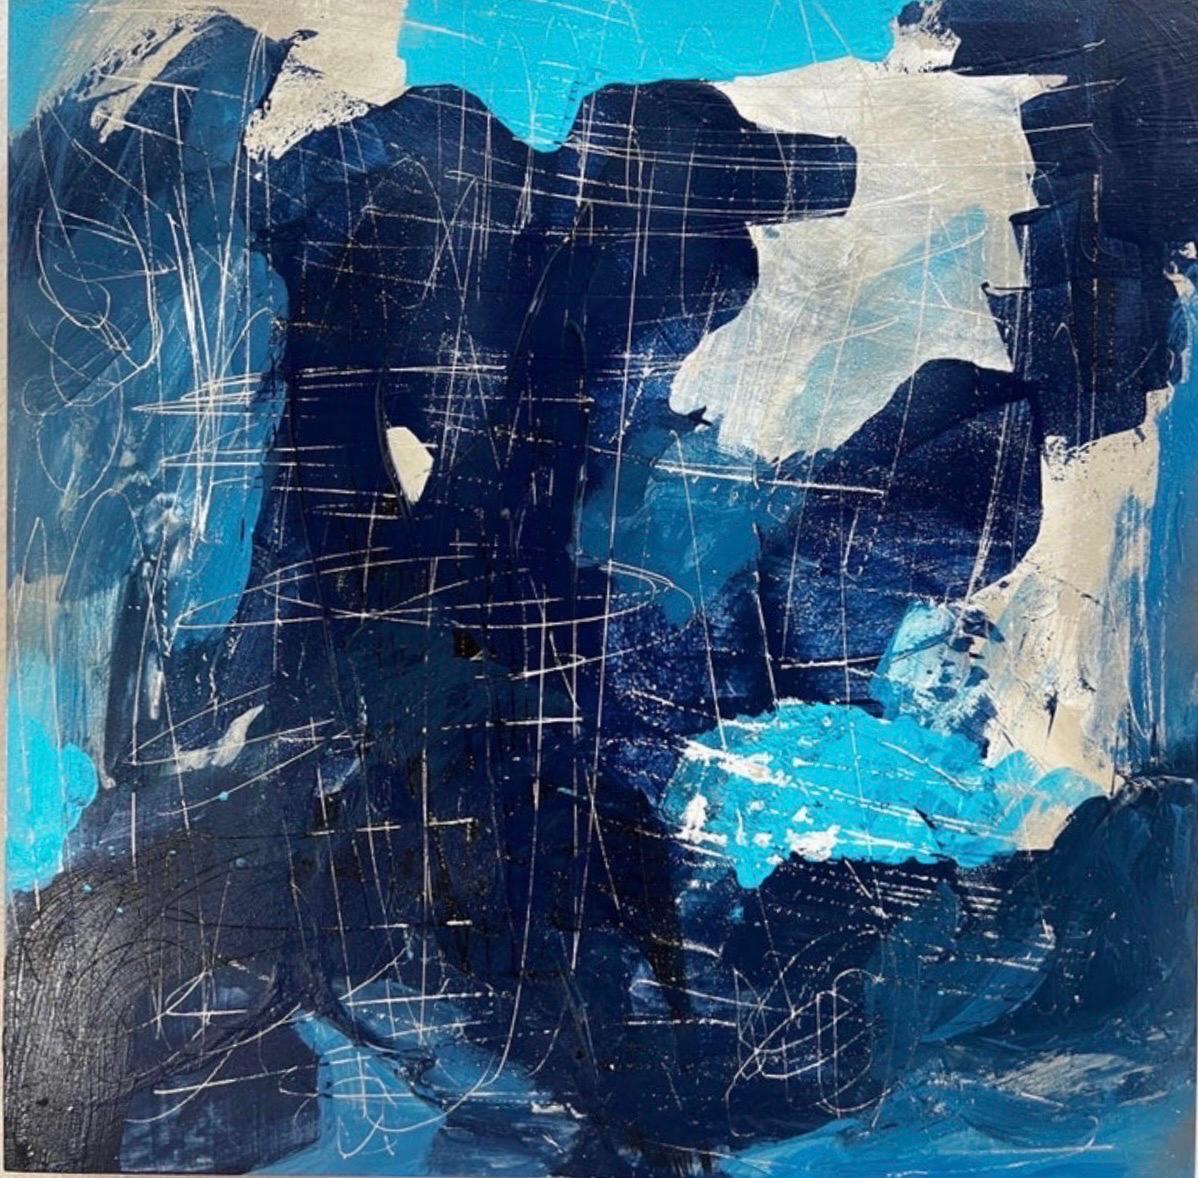 Mirtha Moreno Abstract Painting - Acrylic Painting on Panel Titled: “Blue Hues II”